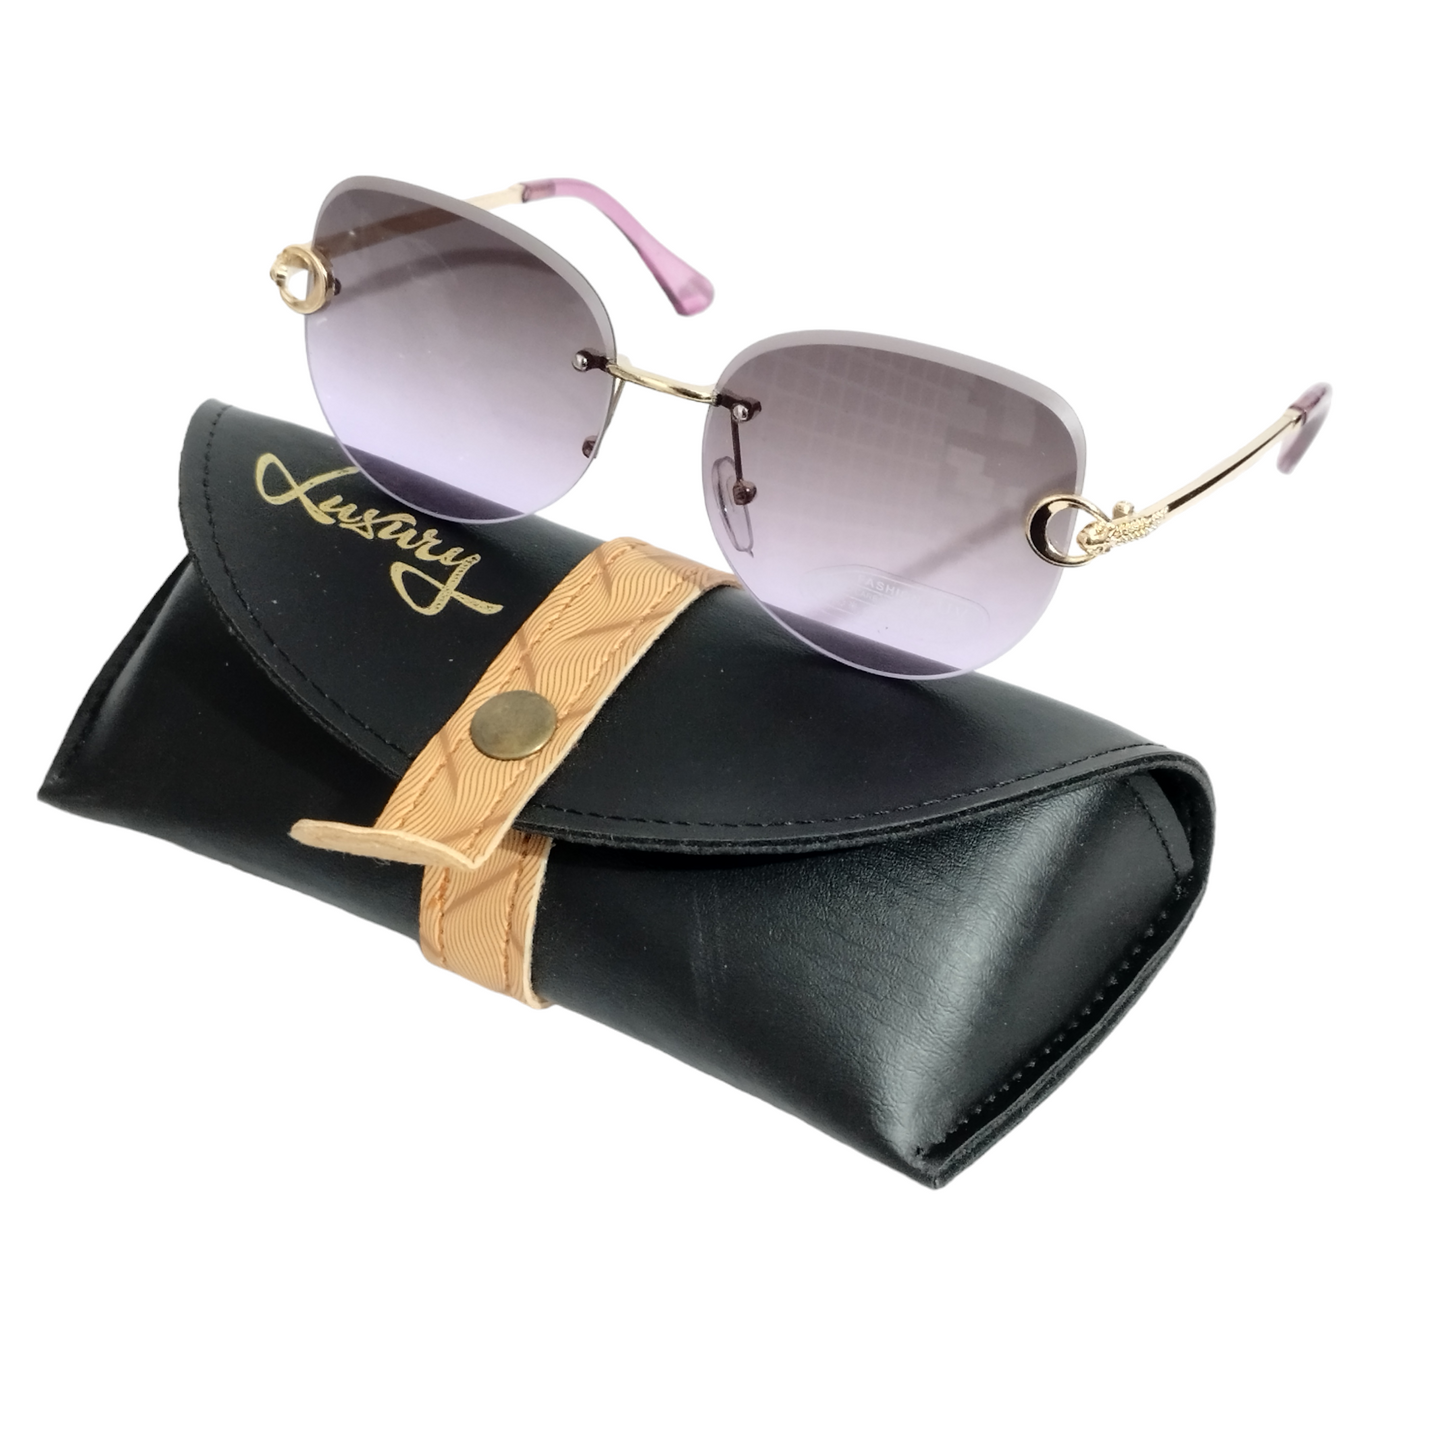 Purple Rimless Sunglasses for Women